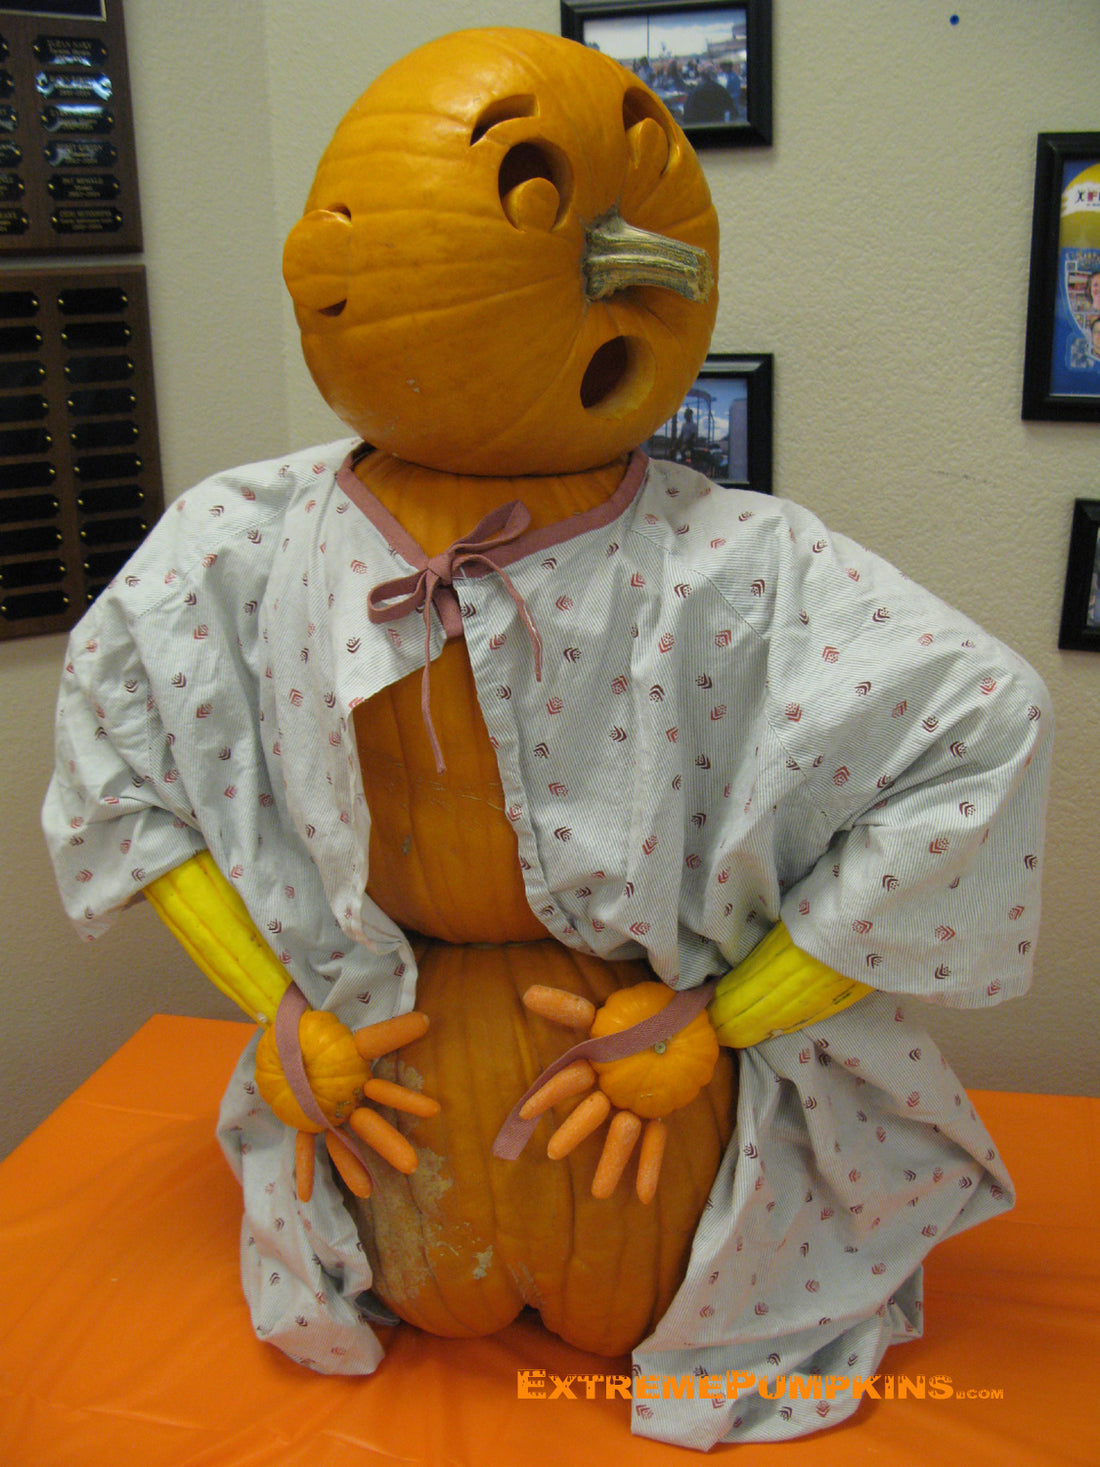 The Hospital Gown Pumpkin